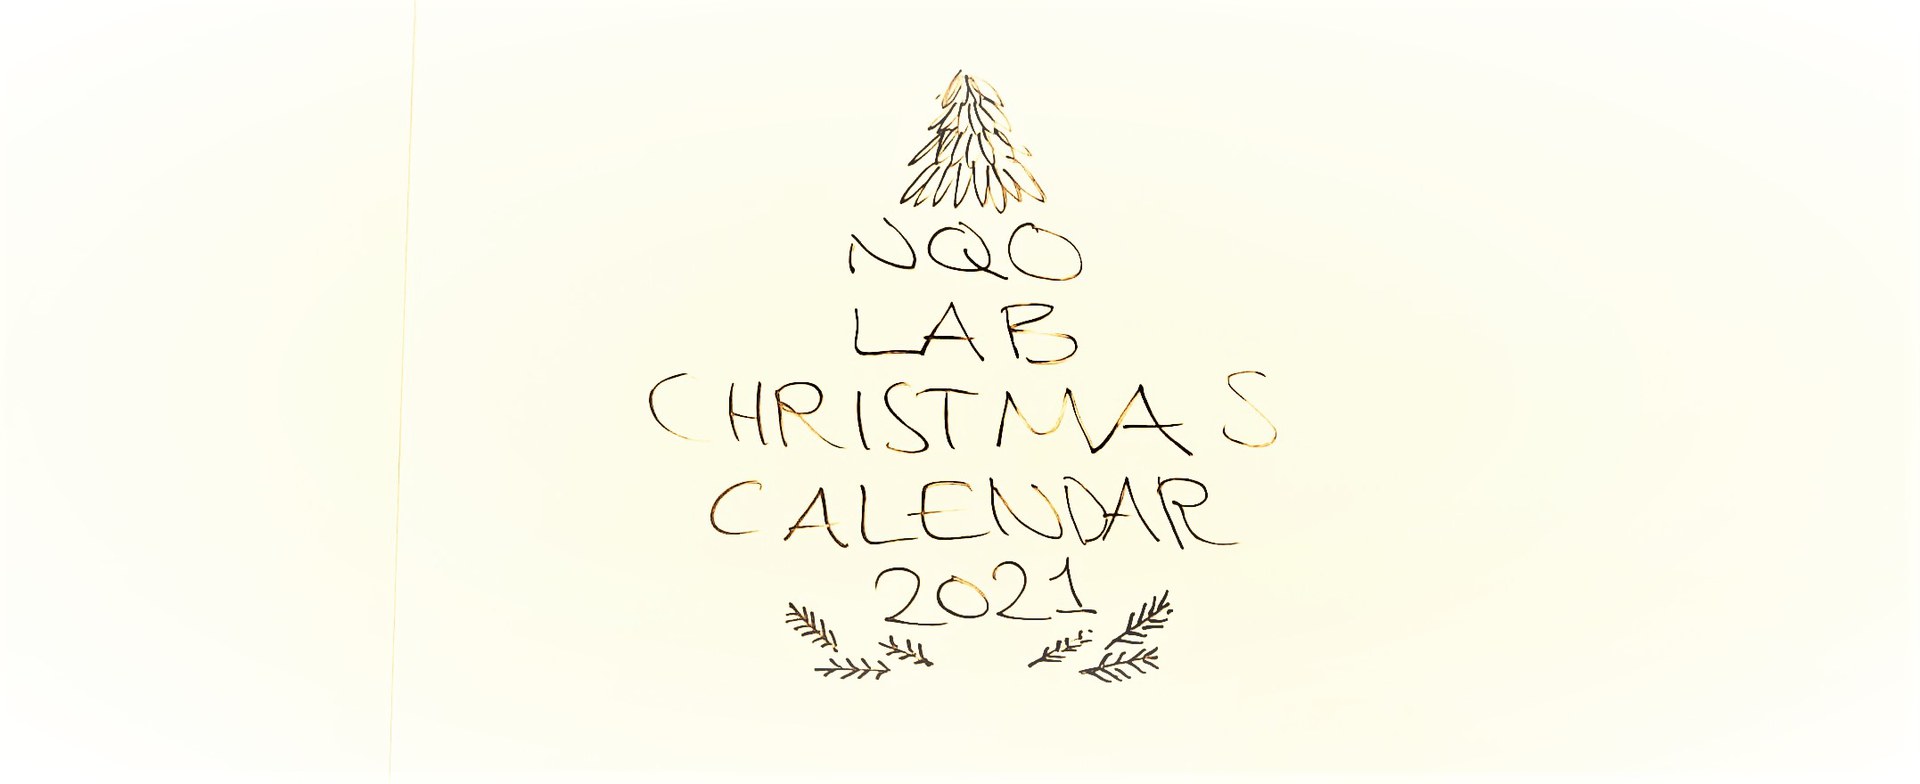 NQO Lab Christmas Calendar 2021 - winner!